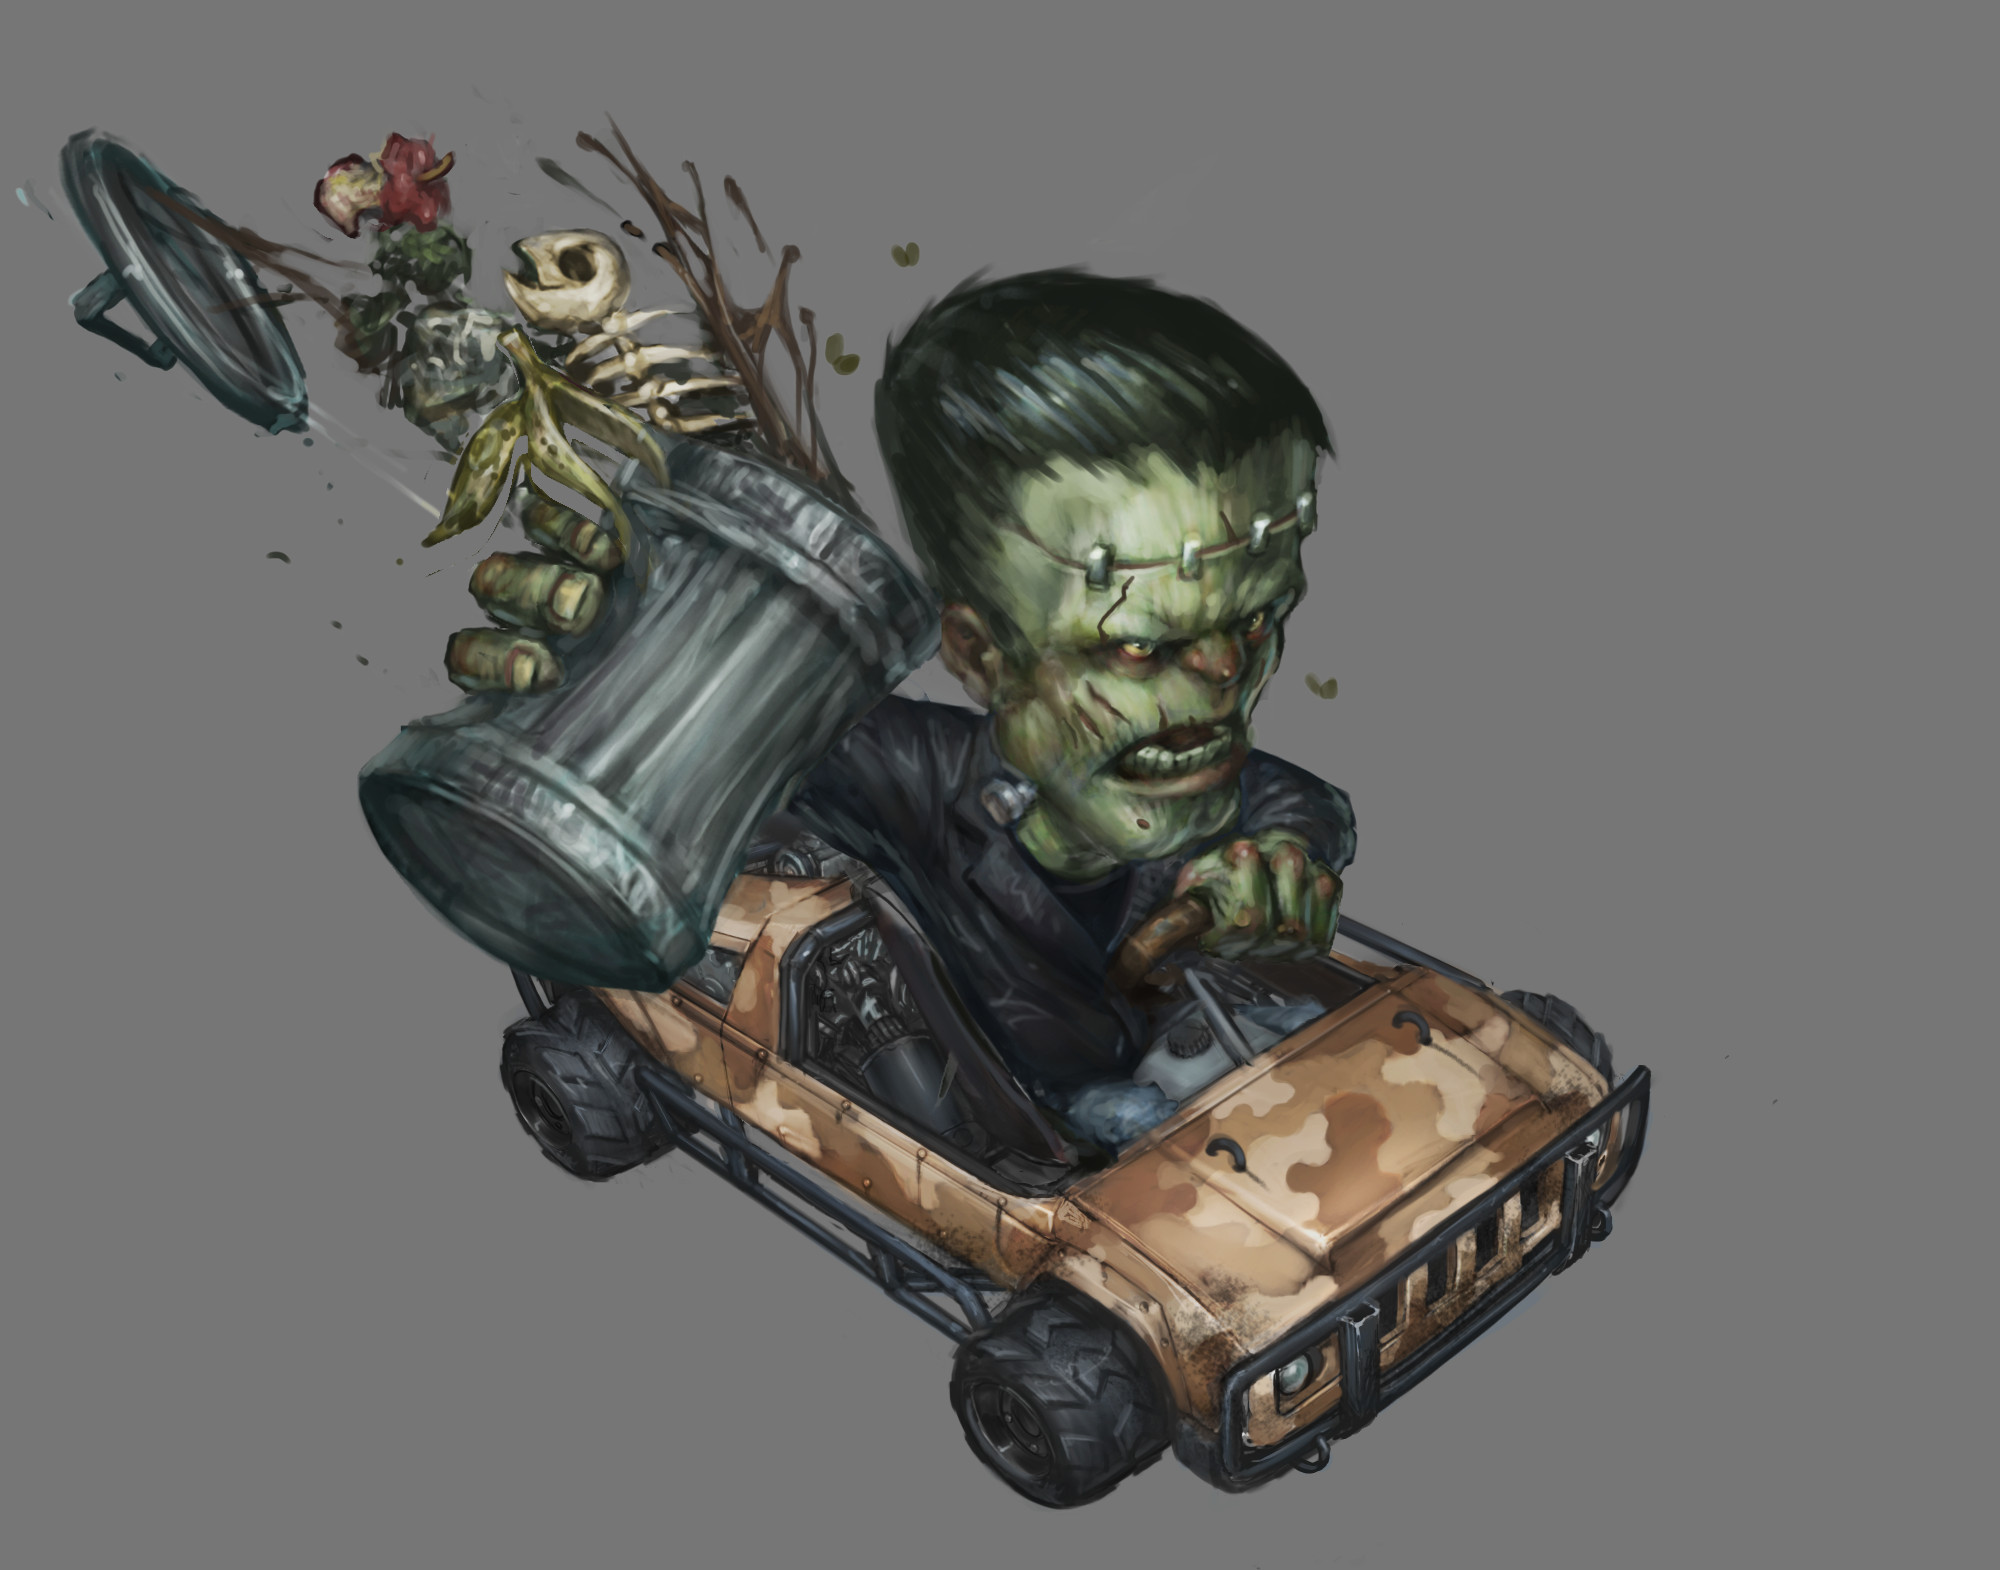 Franken monster and vehicle